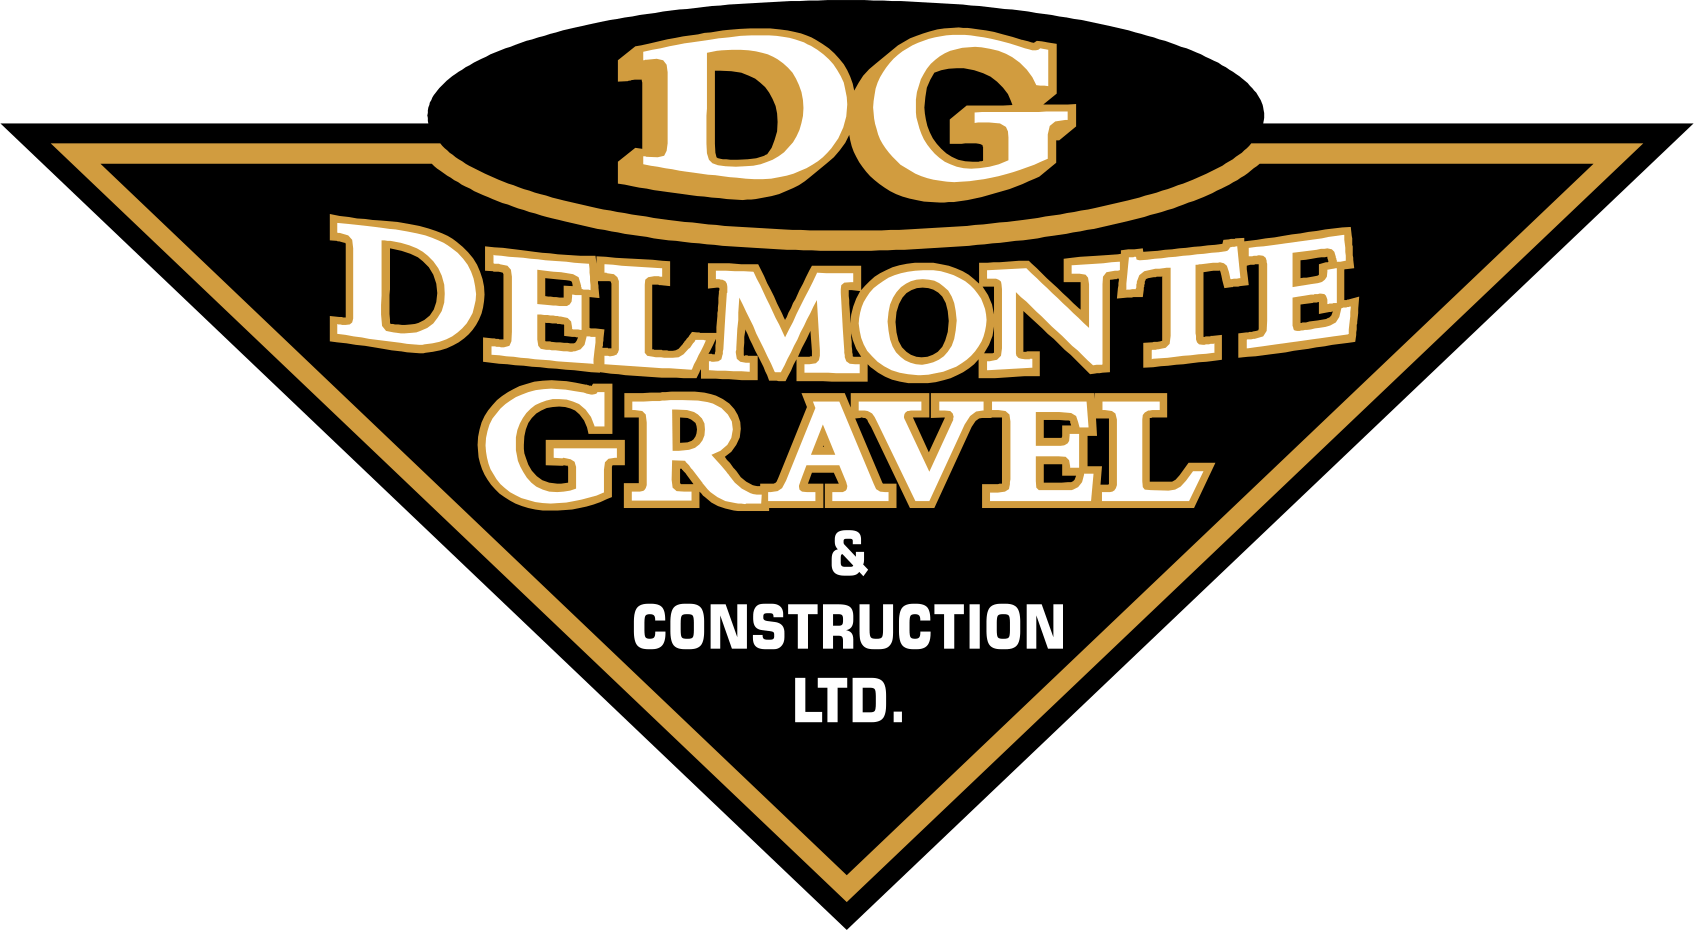 Delmonte Gravel & Construction Ltd.